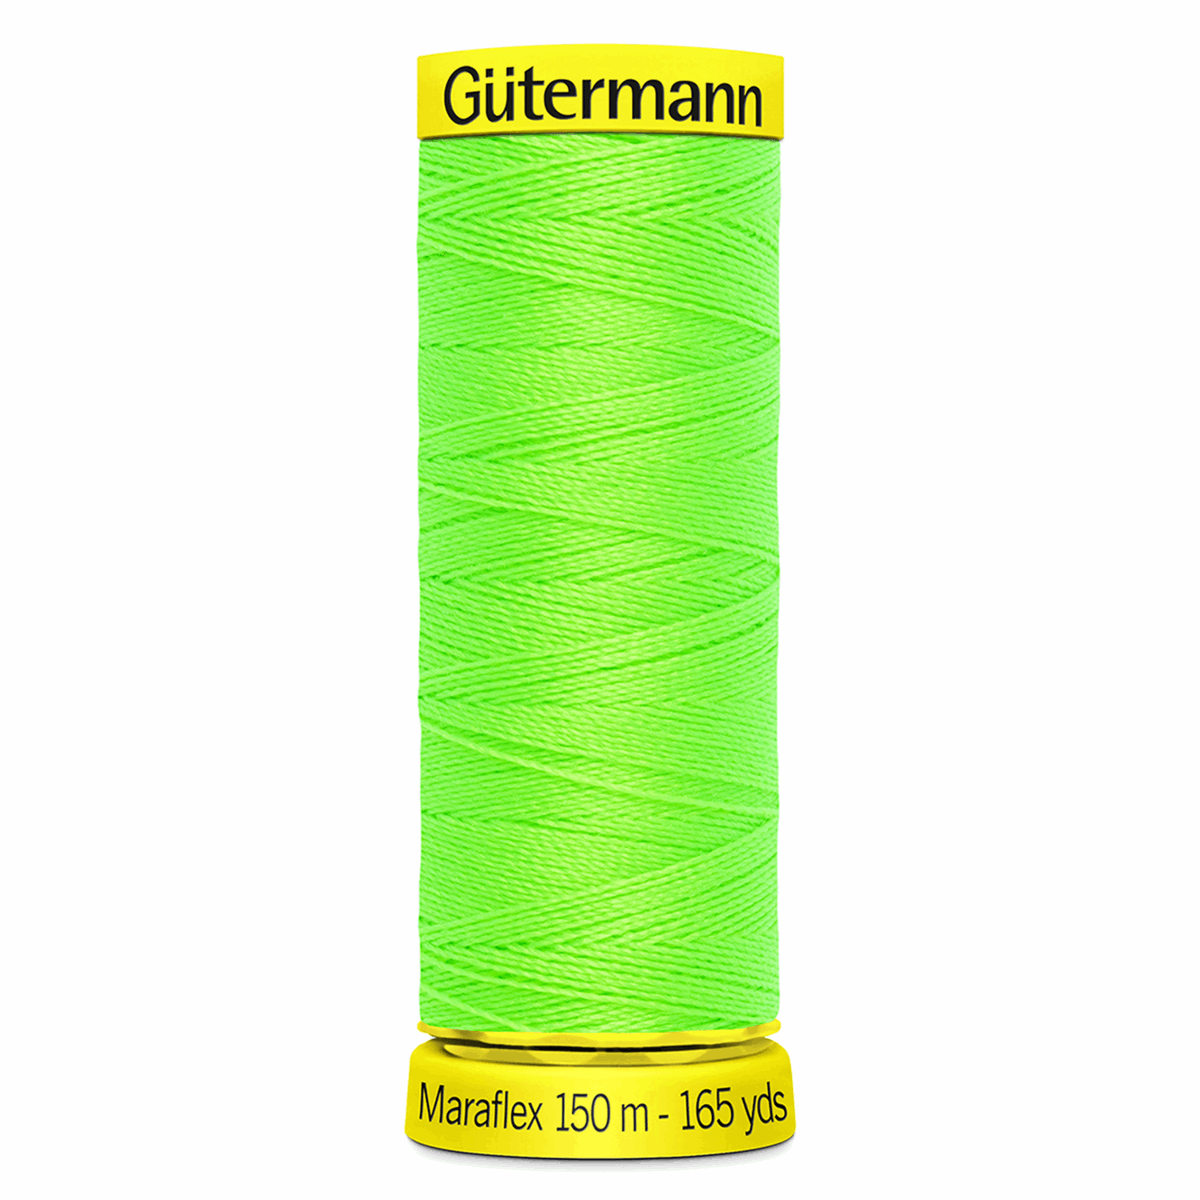 Gutermann Maraflex Elastic Sewing Thread 150m Neon Green 3853